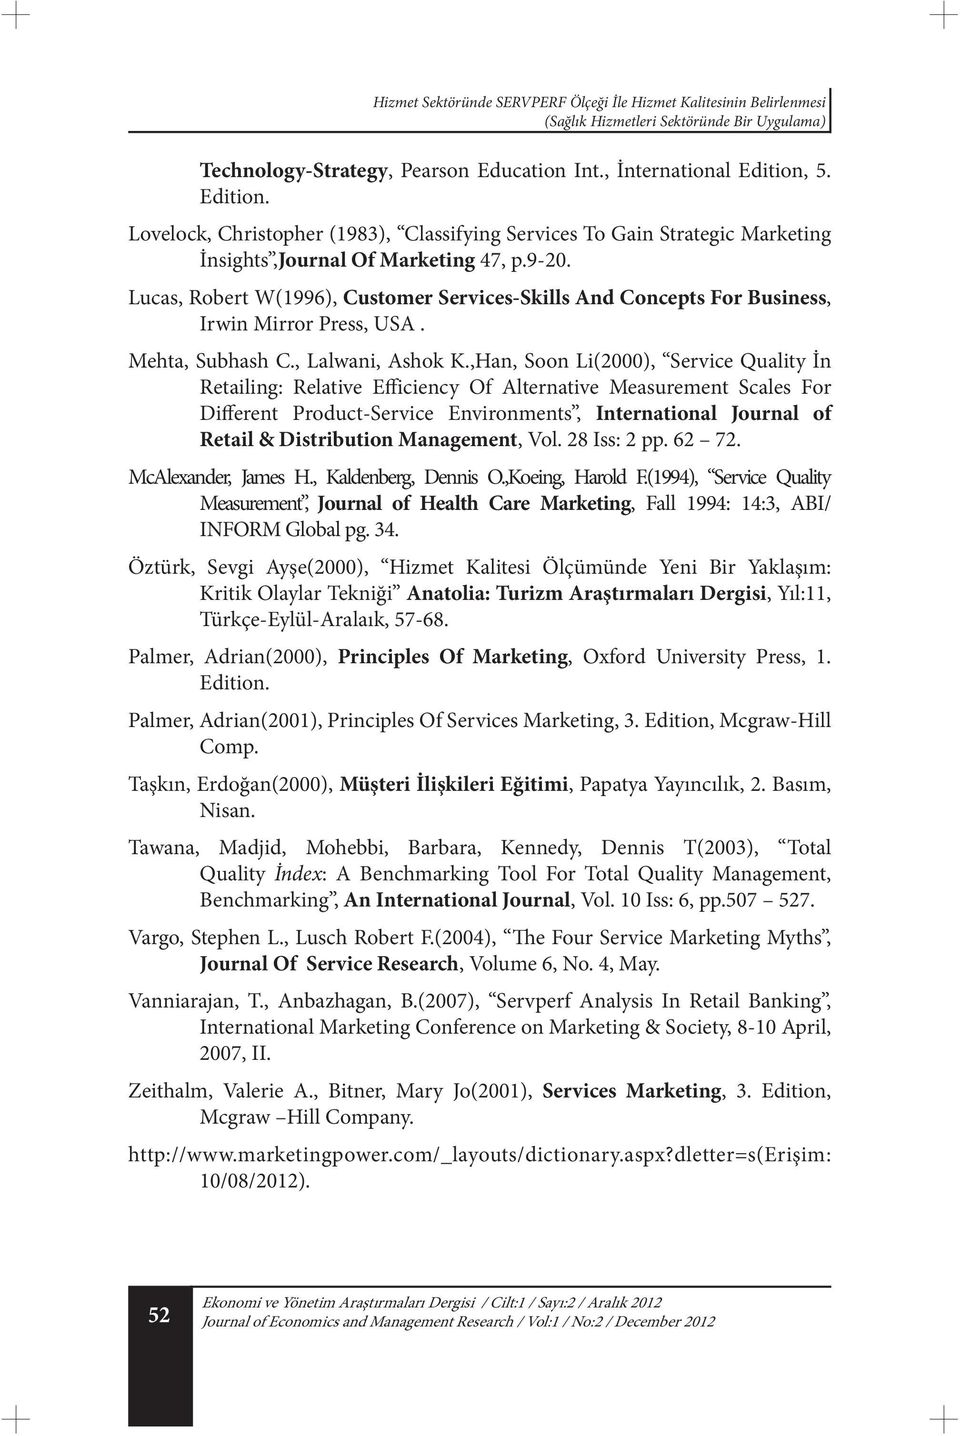 Lucas, Robert W(1996), Customer Services-Skills And Concepts For Business, Irwin Mirror Press, USA. Mehta, Subhash C., Lalwani, Ashok K.